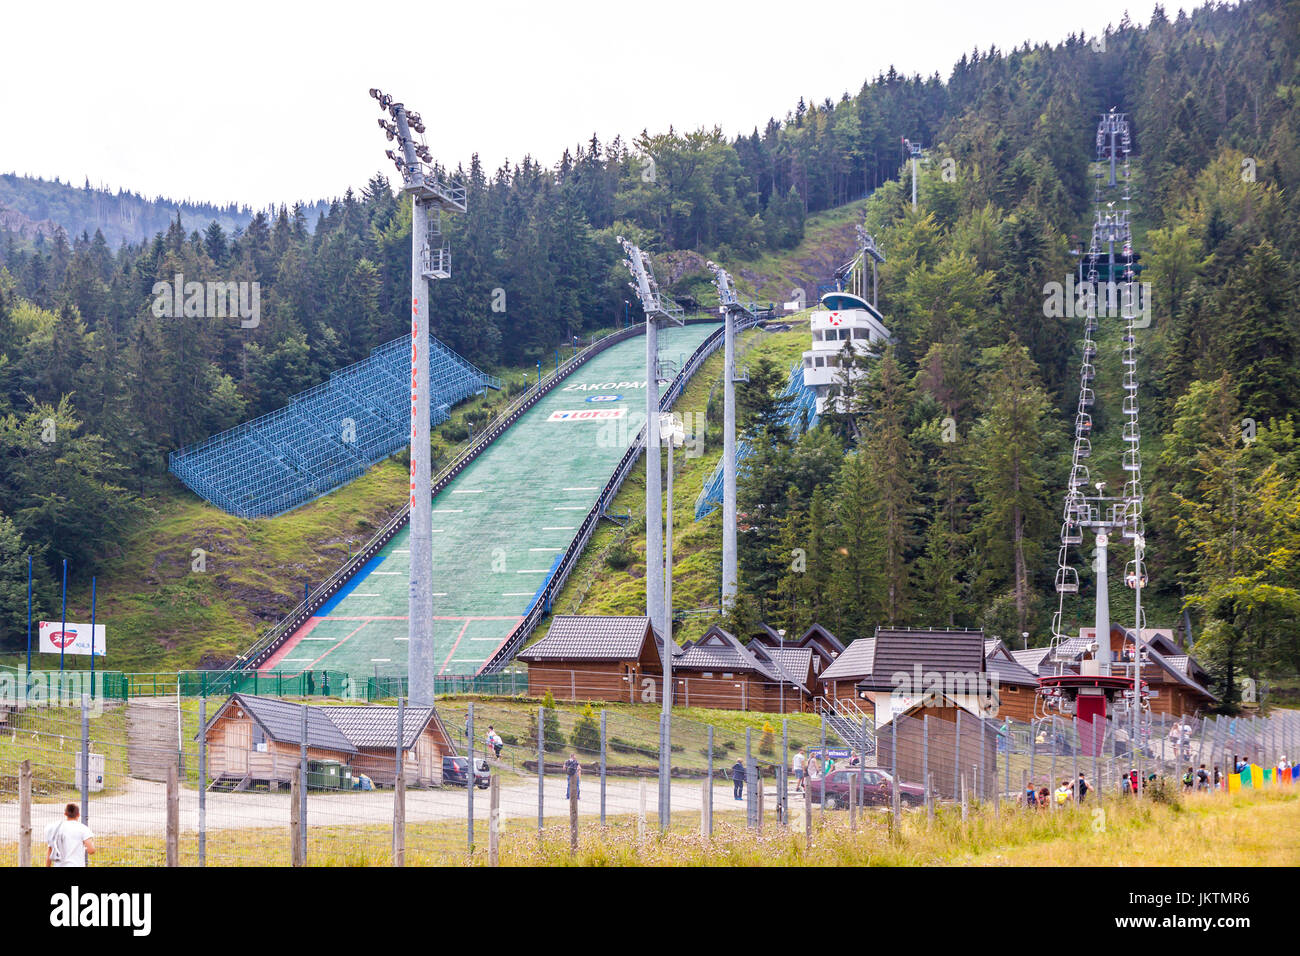 ZAKOPANE, POLAND - AUG 3, 2015: Wielka Krokiew (The Great Krokiew), ski jumping venue on the slope of Krokiew mountain (1378 m) in Zakopane. It is a r Stock Photo